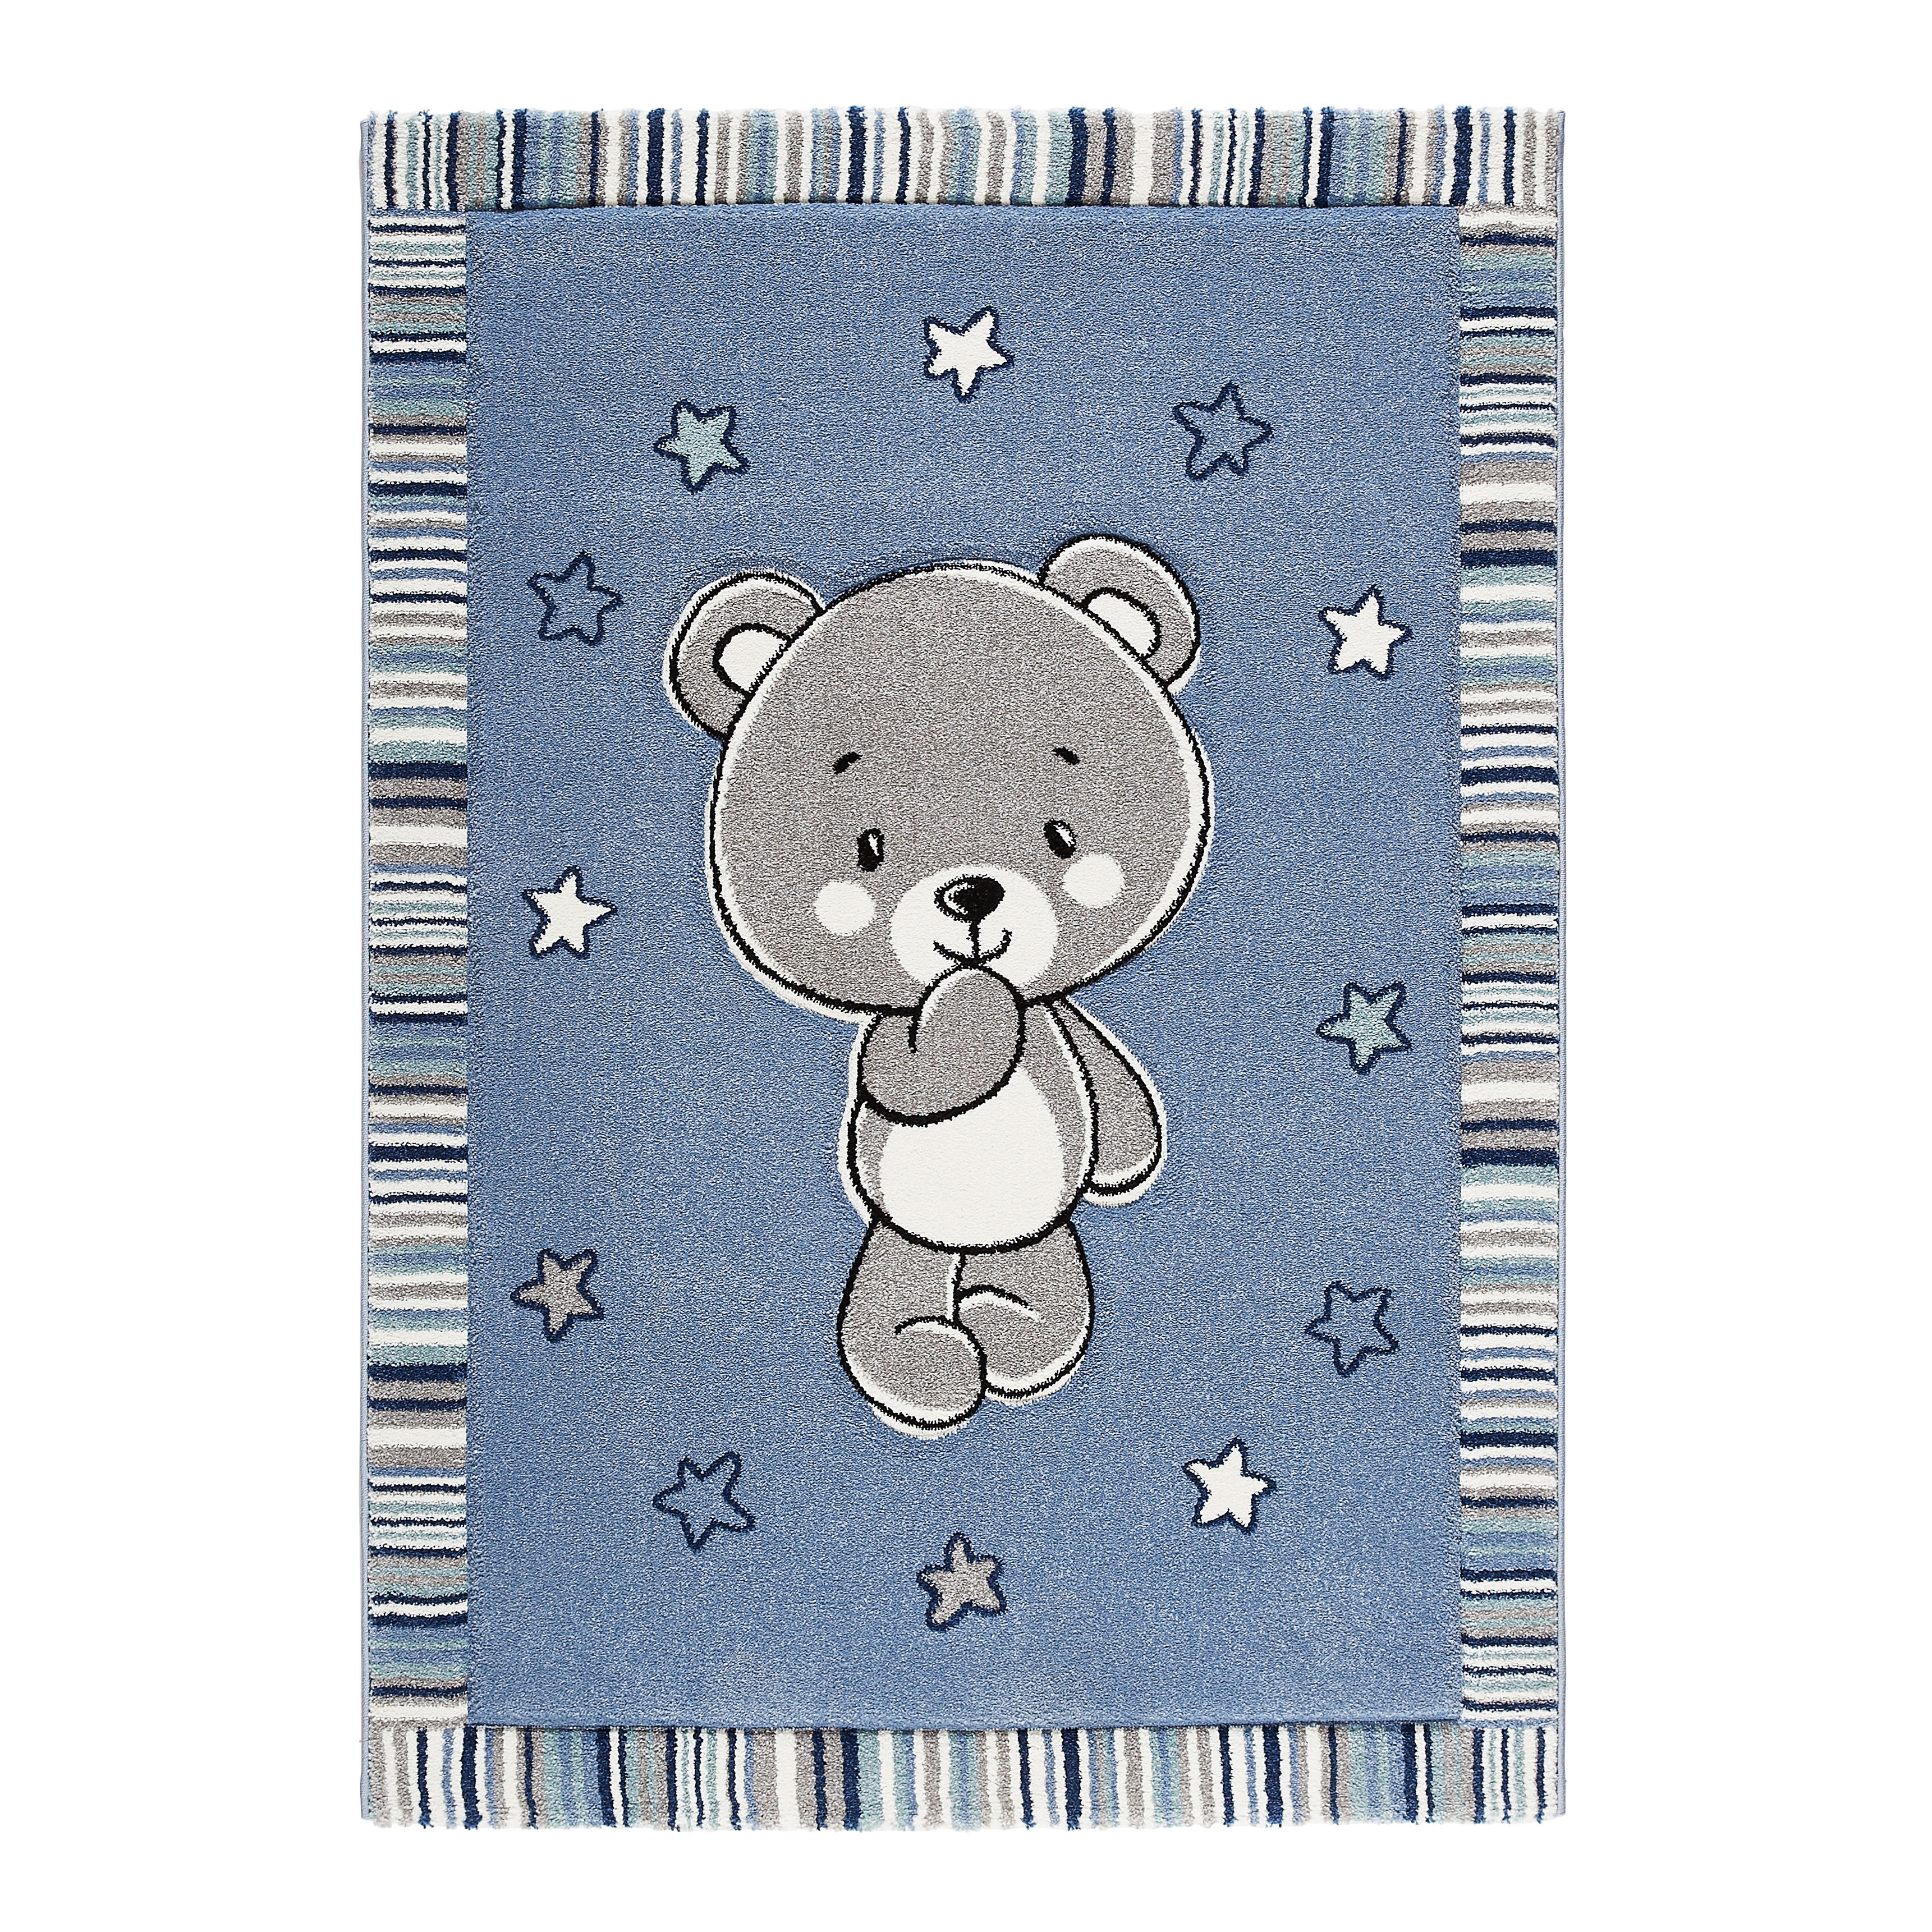 KINDERTEPPICH 80/150 cm Teddy  - Blau, Trend, Textil (80/150cm) - Ben'n'jen